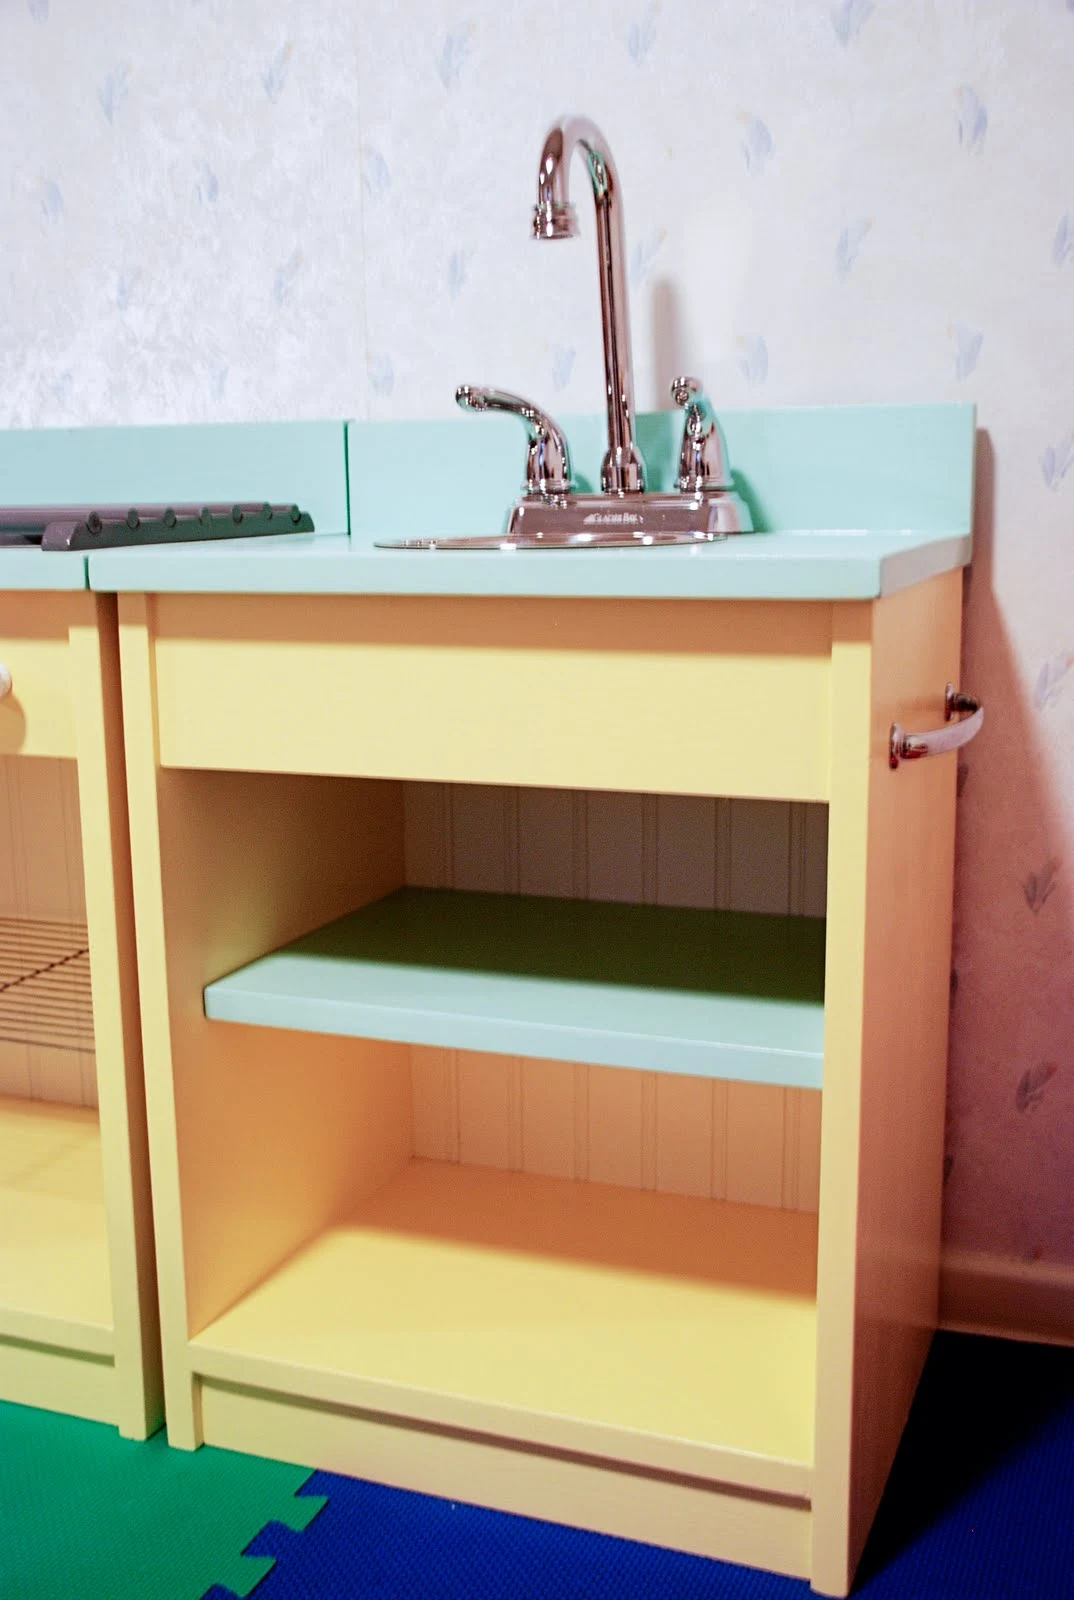 diy wooden play kitchen, play kitchen stove, play kitchen sink, homemade play kitchen, diy toy kitchen